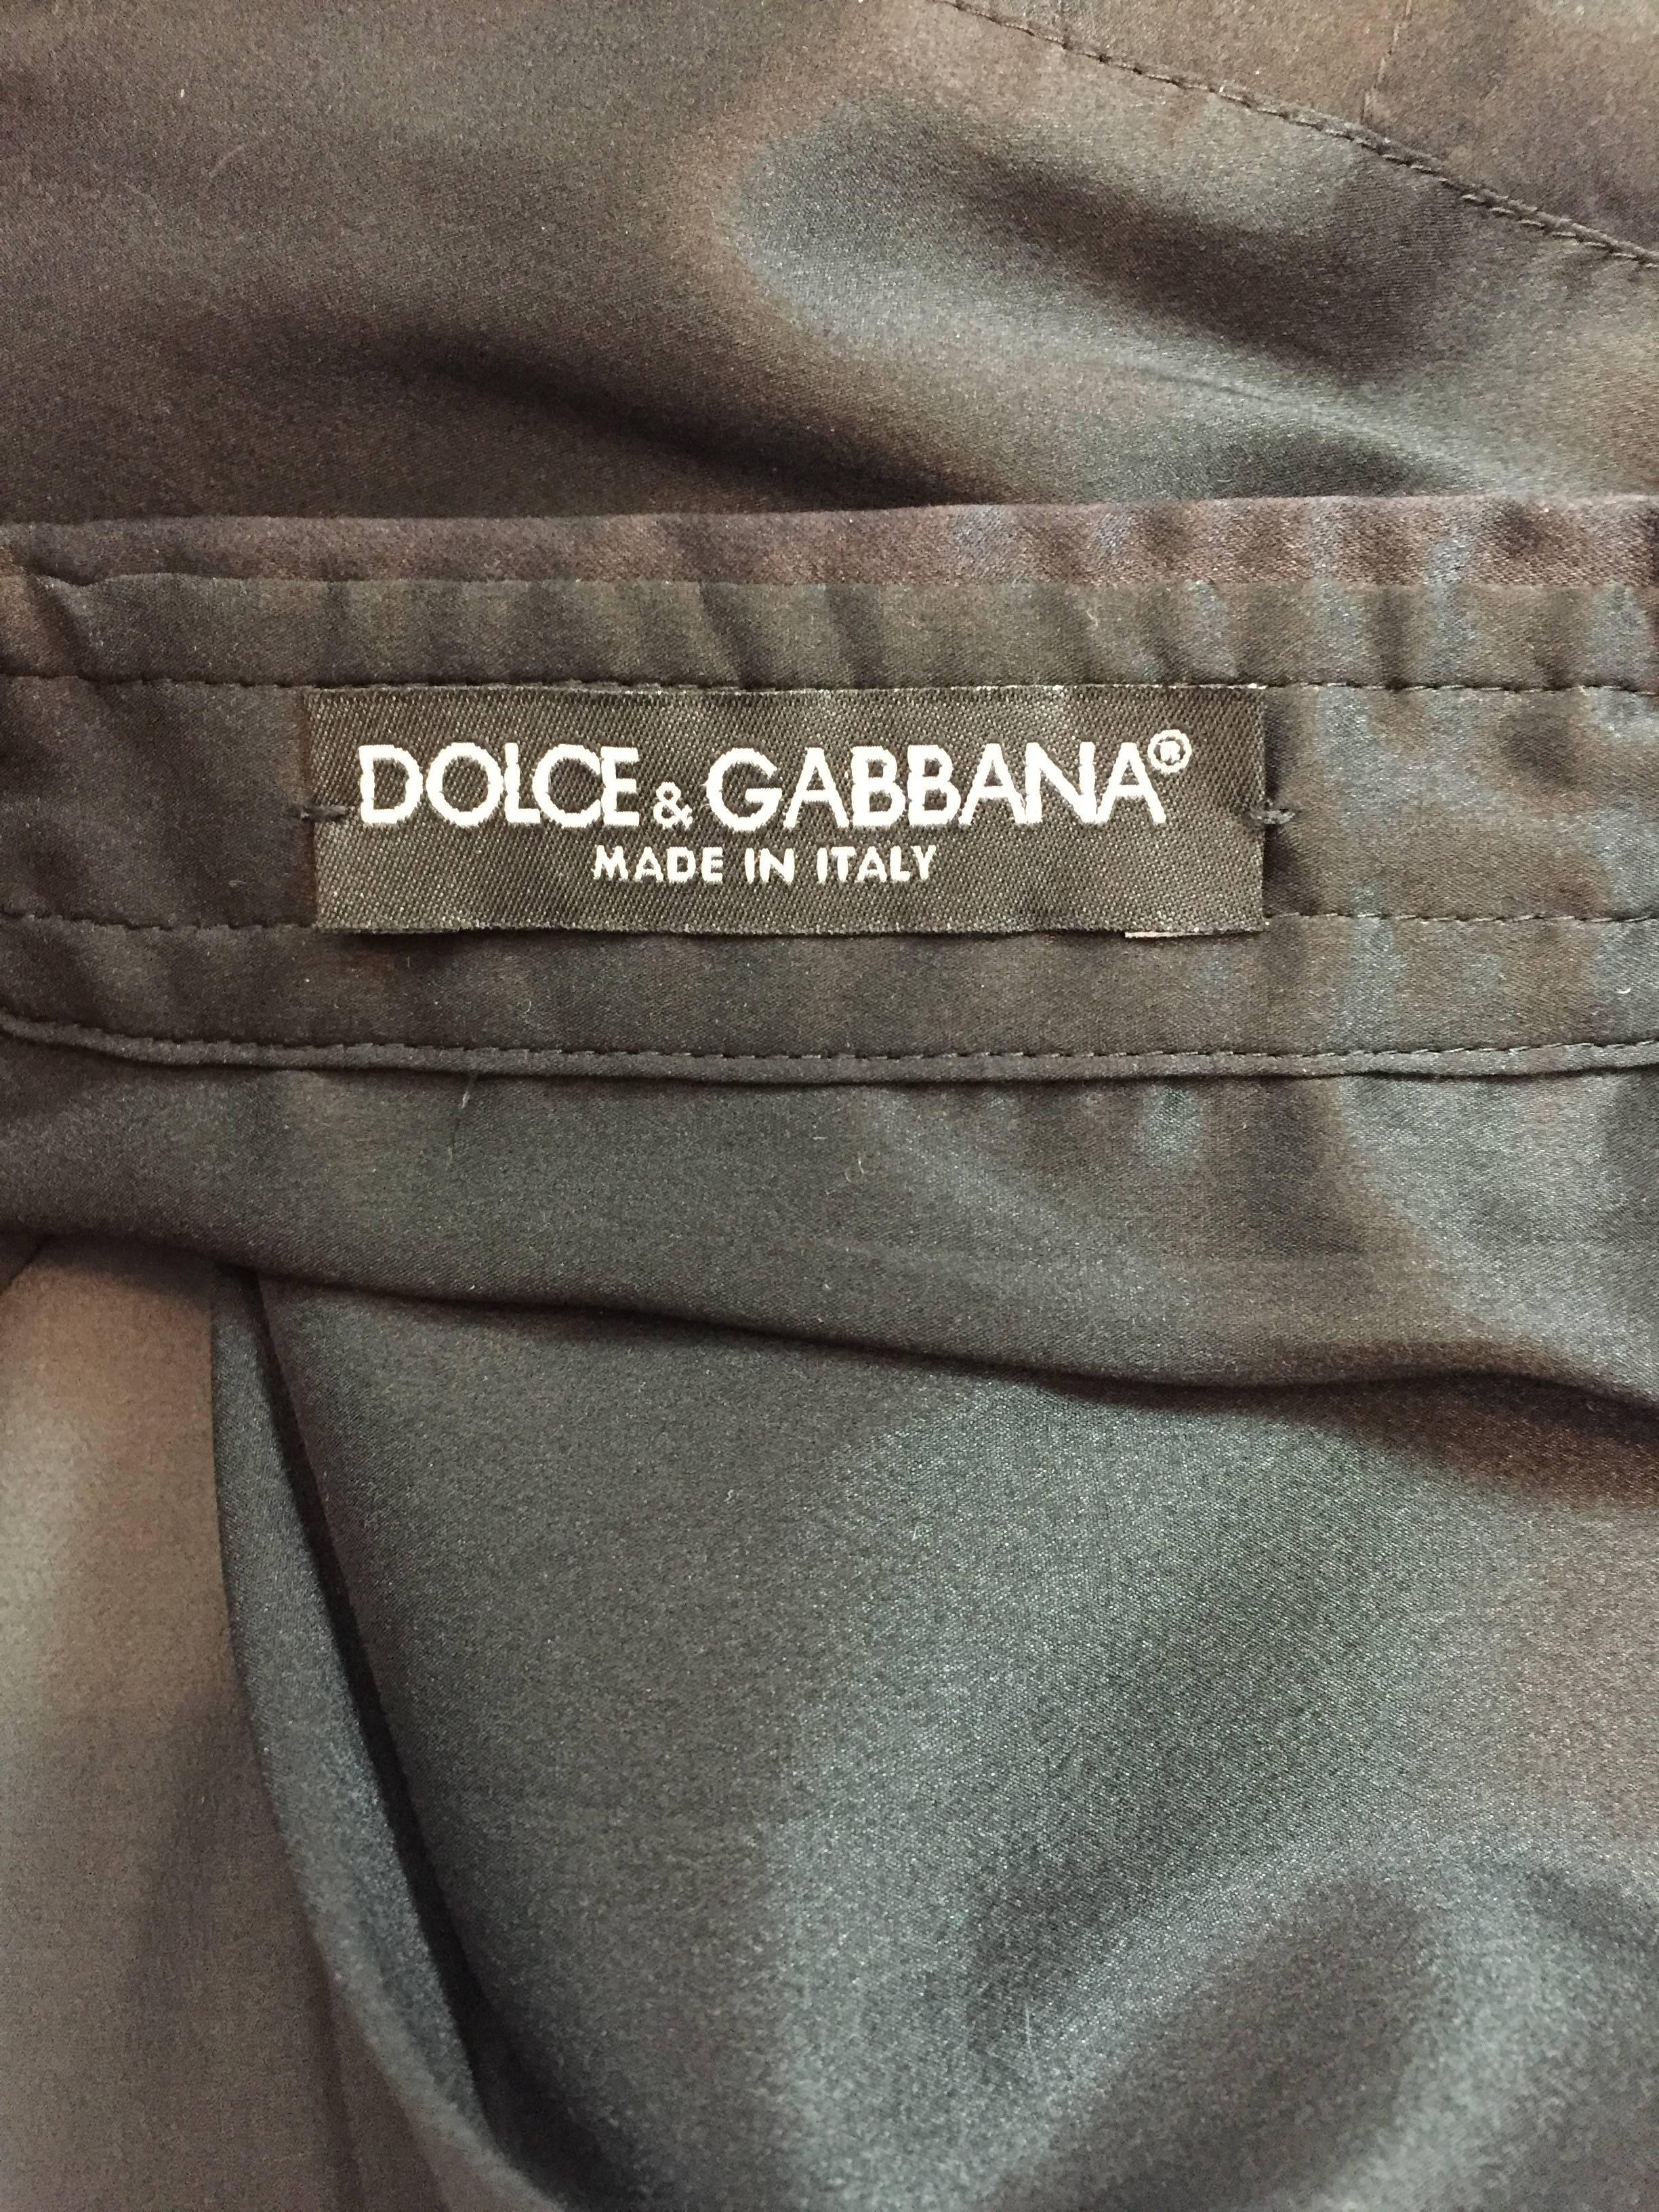 Women's S/S 2000 Dolce & Gabbana Sheer Black Button Down Tunic Dress Blouse